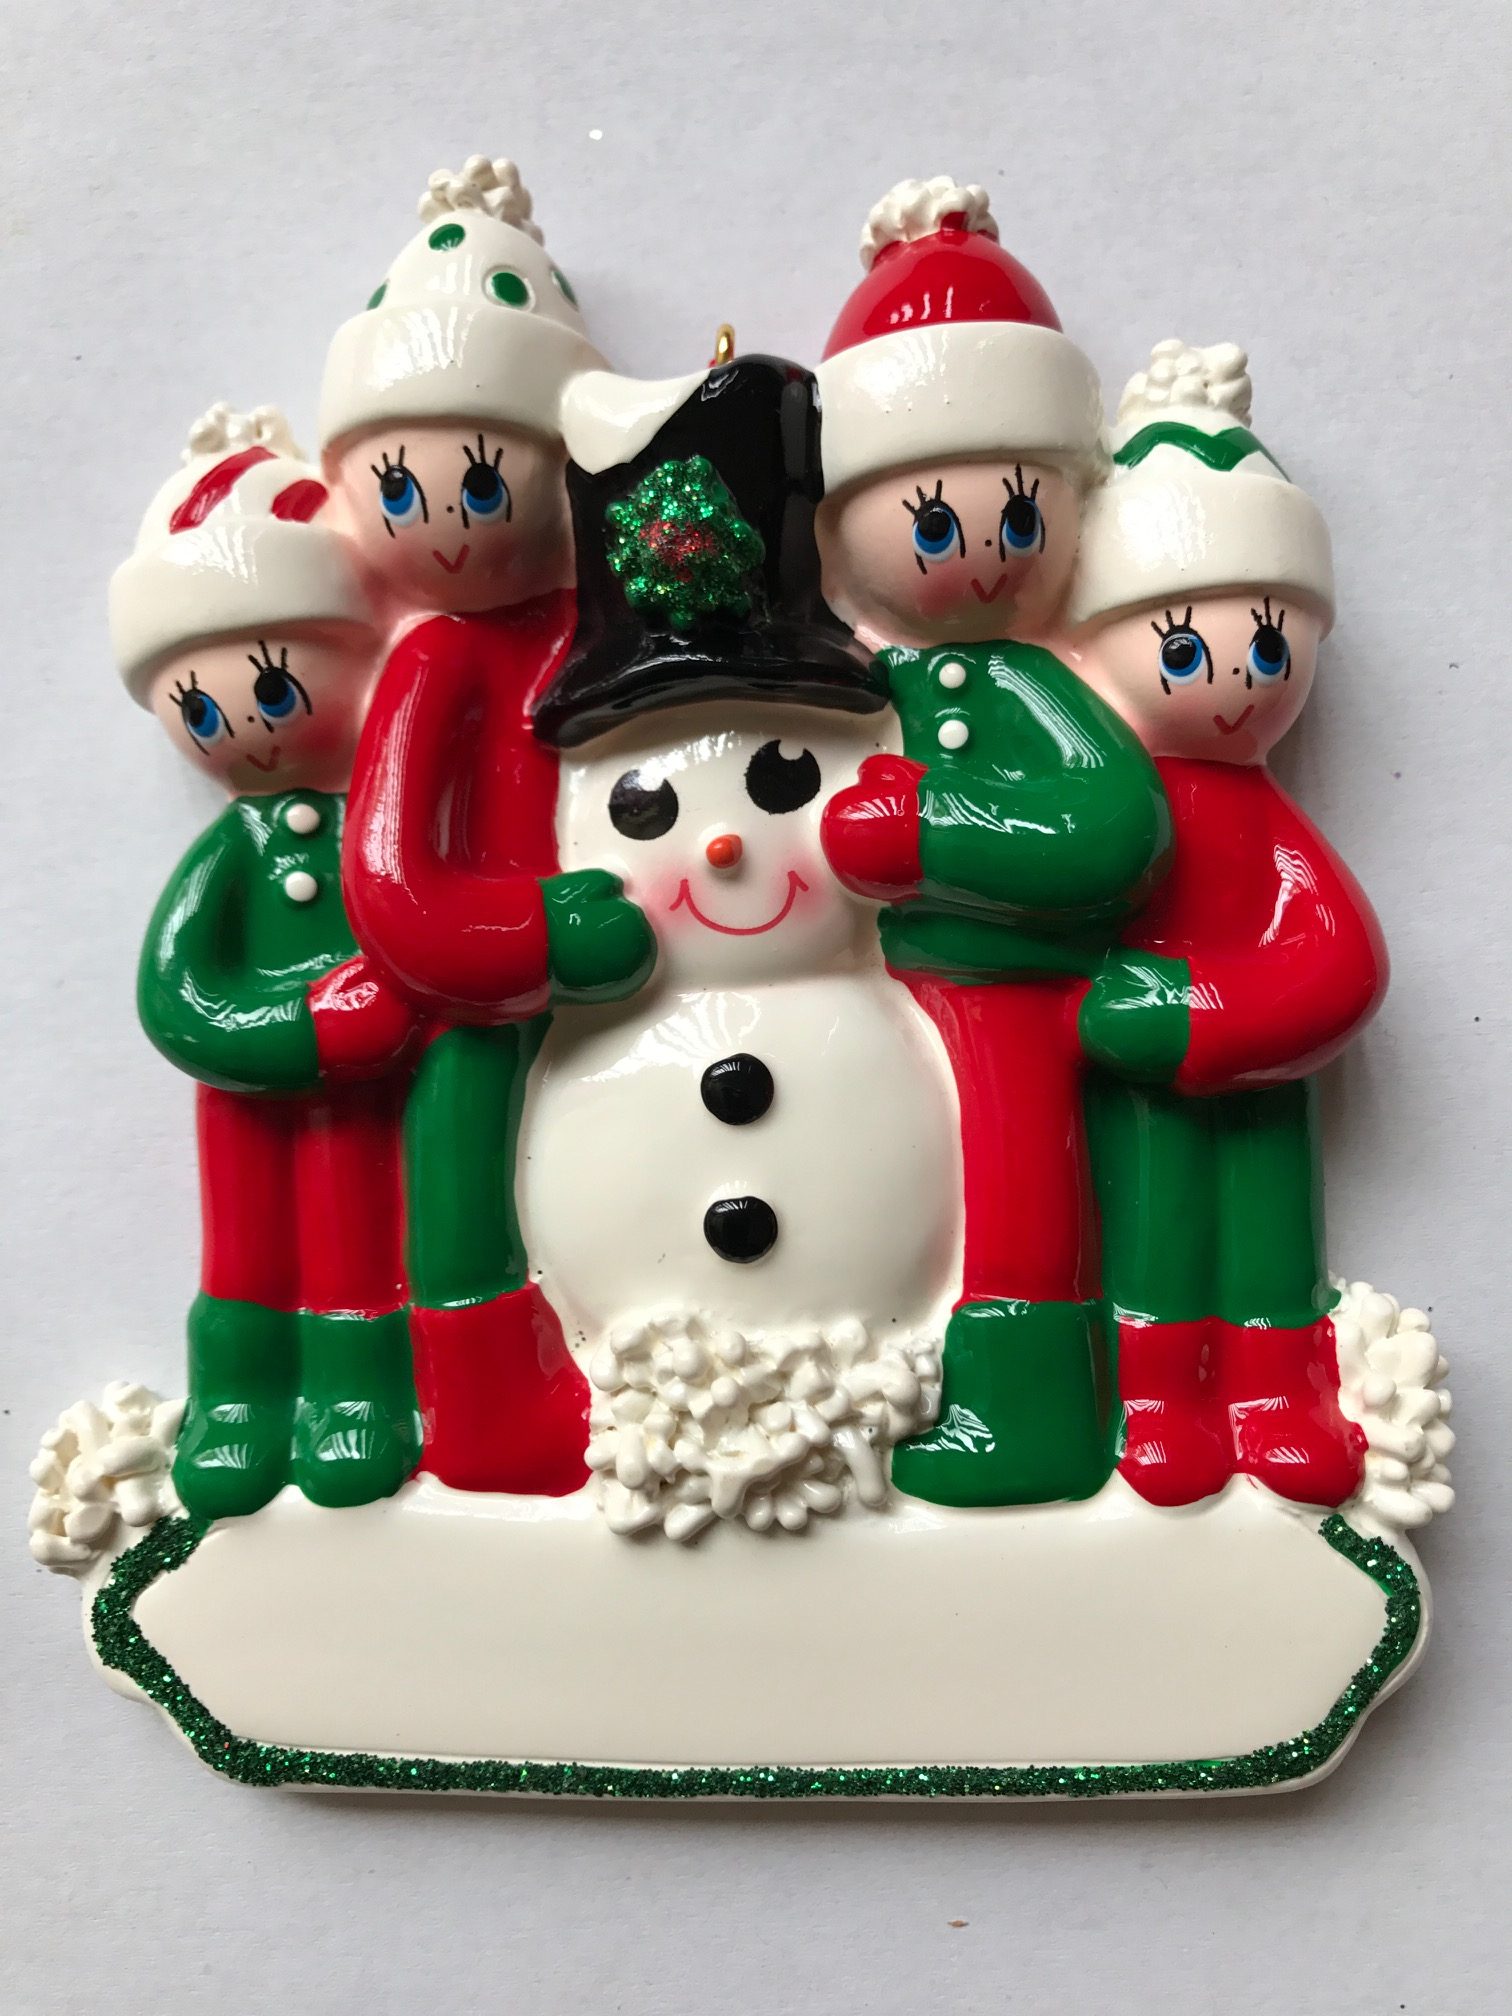 Making a Snowman x 4 - Festive Elf